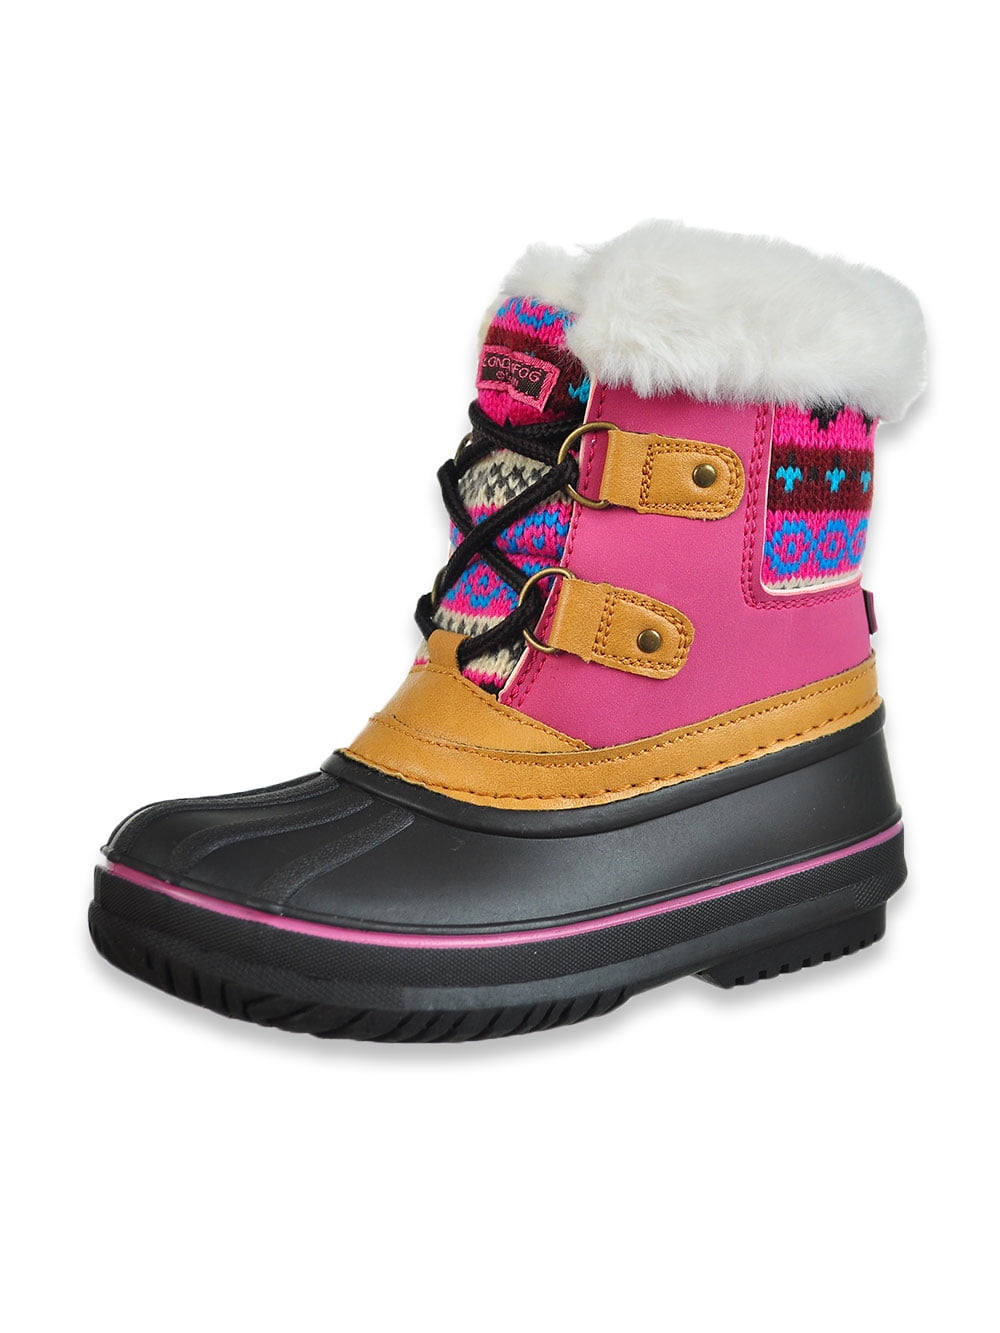 London Fog Girls' Tottenham Winter Boots (Sizes 11 - 4) - Walmart.com